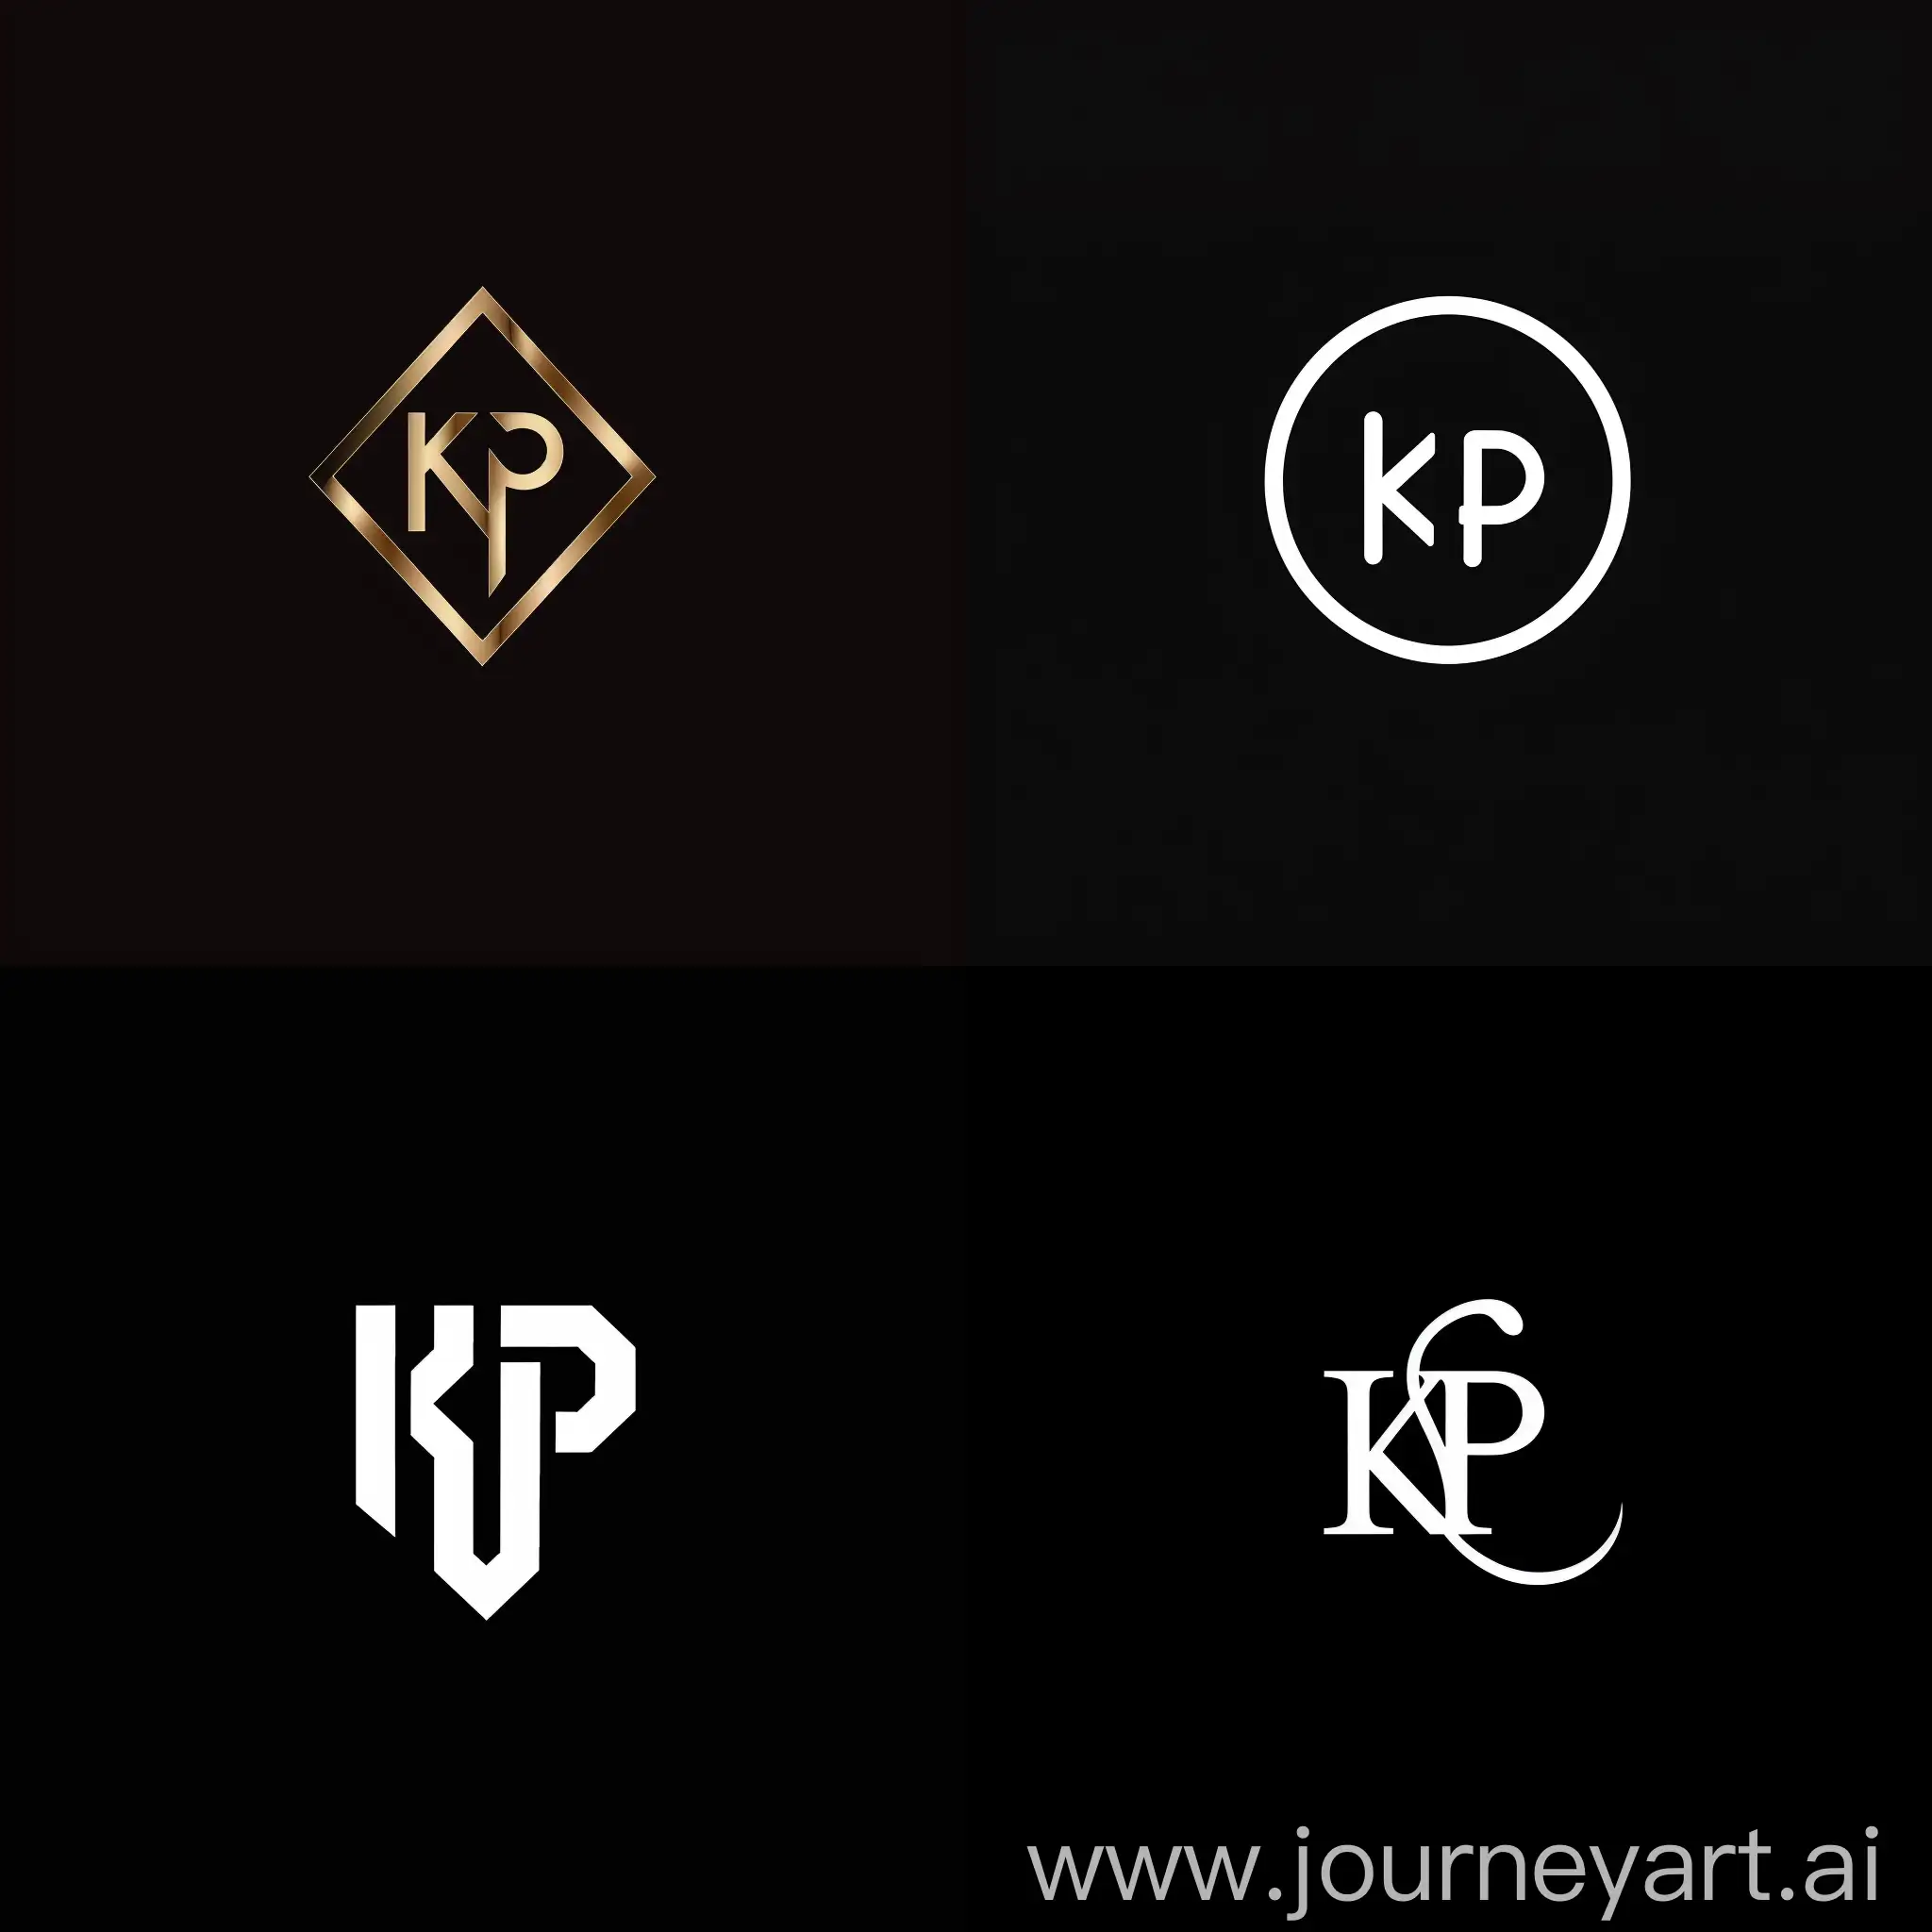 KP-Logo-Design-Version-6-with-Aspect-Ratio-11-Artistic-Abstract-Representation